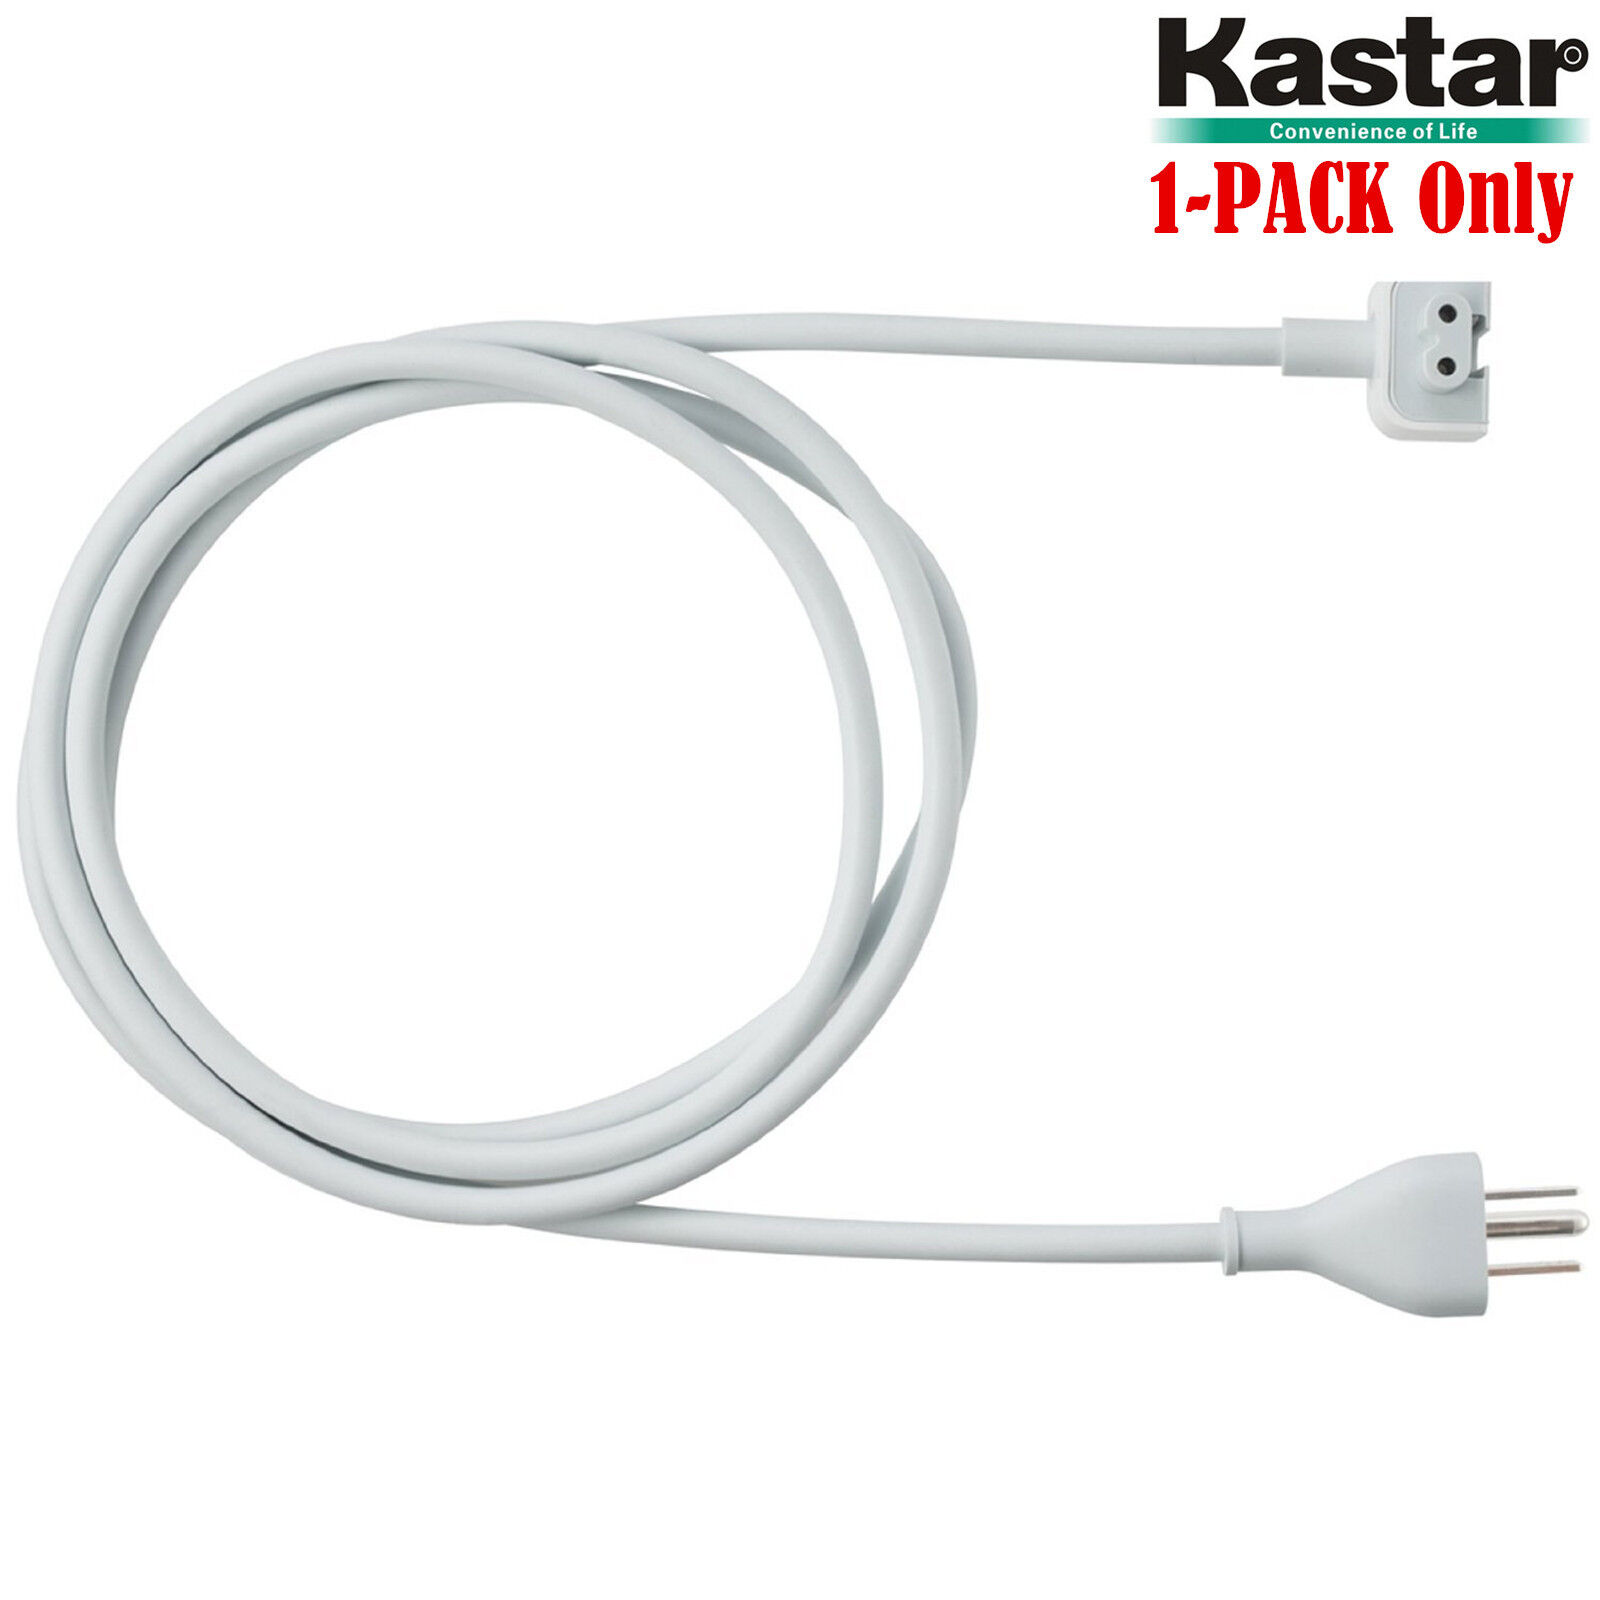 Kastar Power Adapter Extension Cord, 6 Feet for Apple Macbook Pro 45W 60W 85W